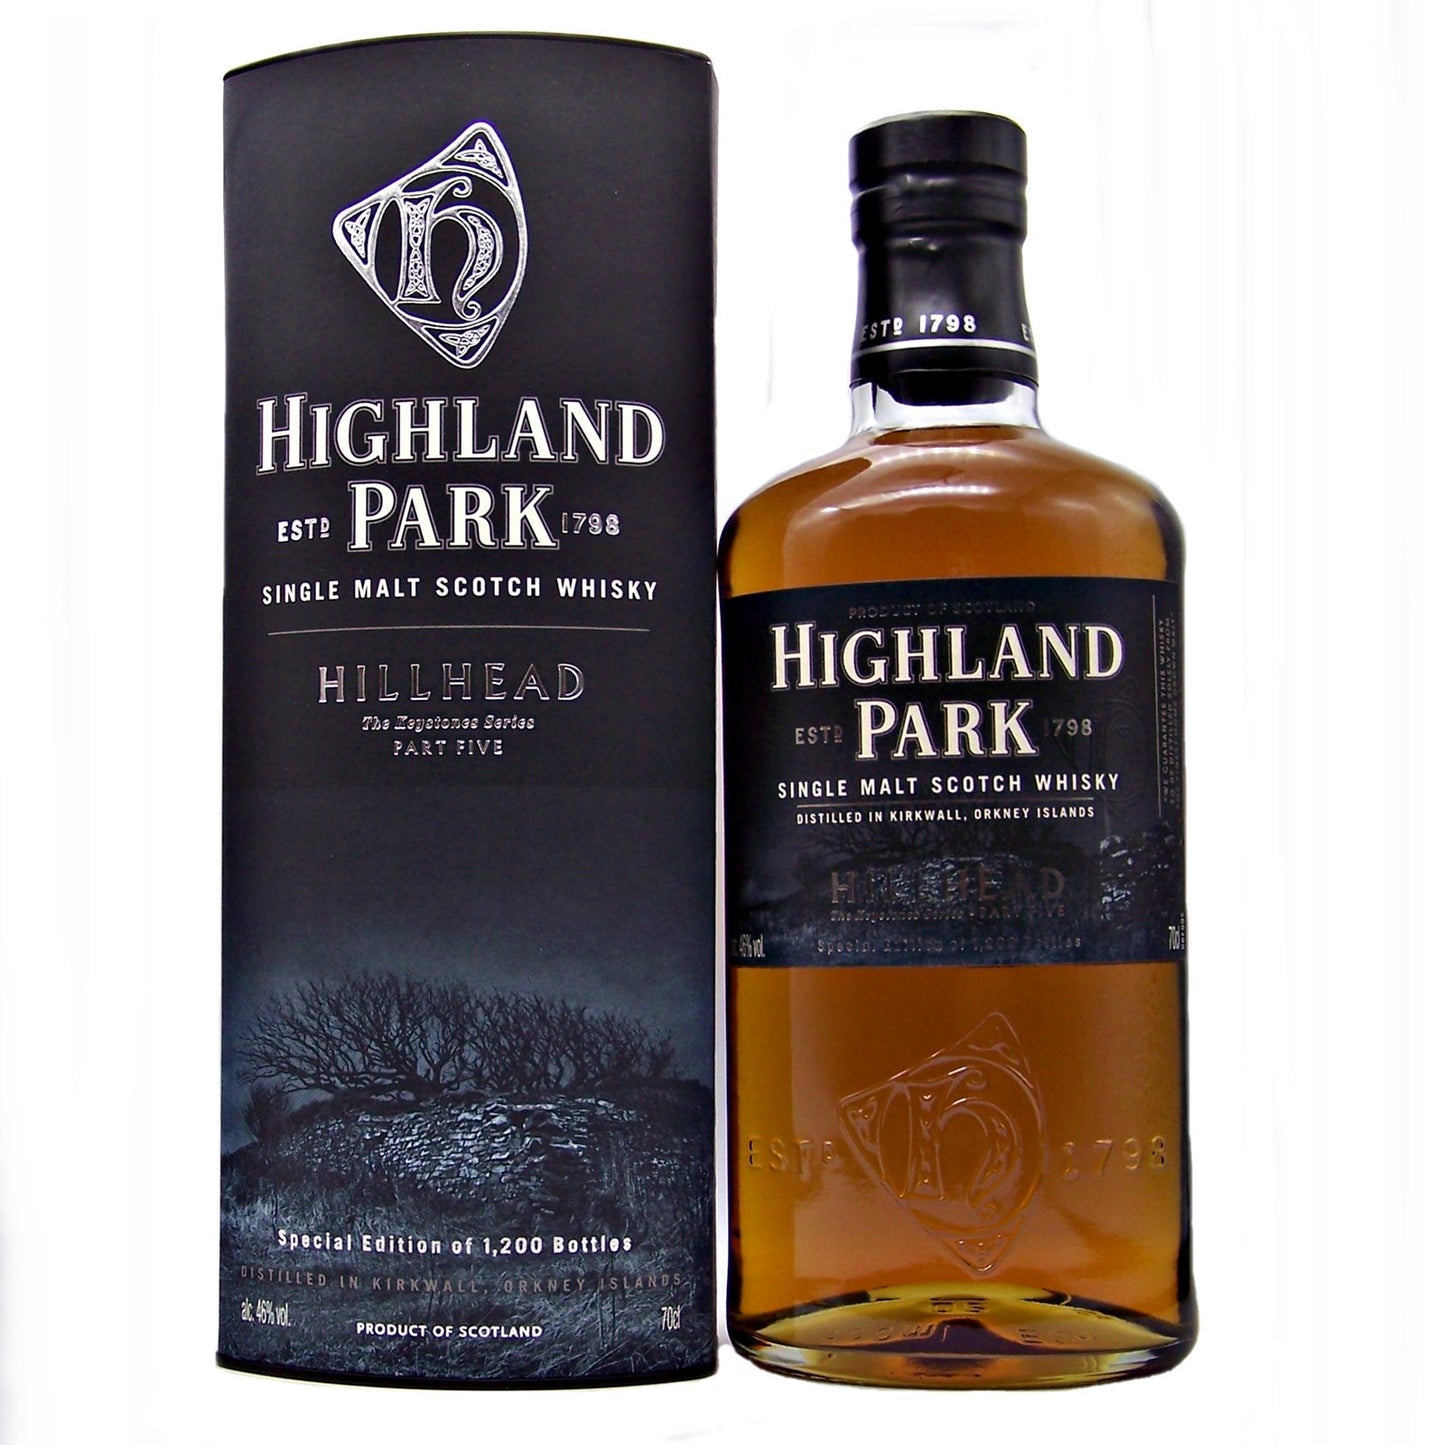 Highland Park Hillhead